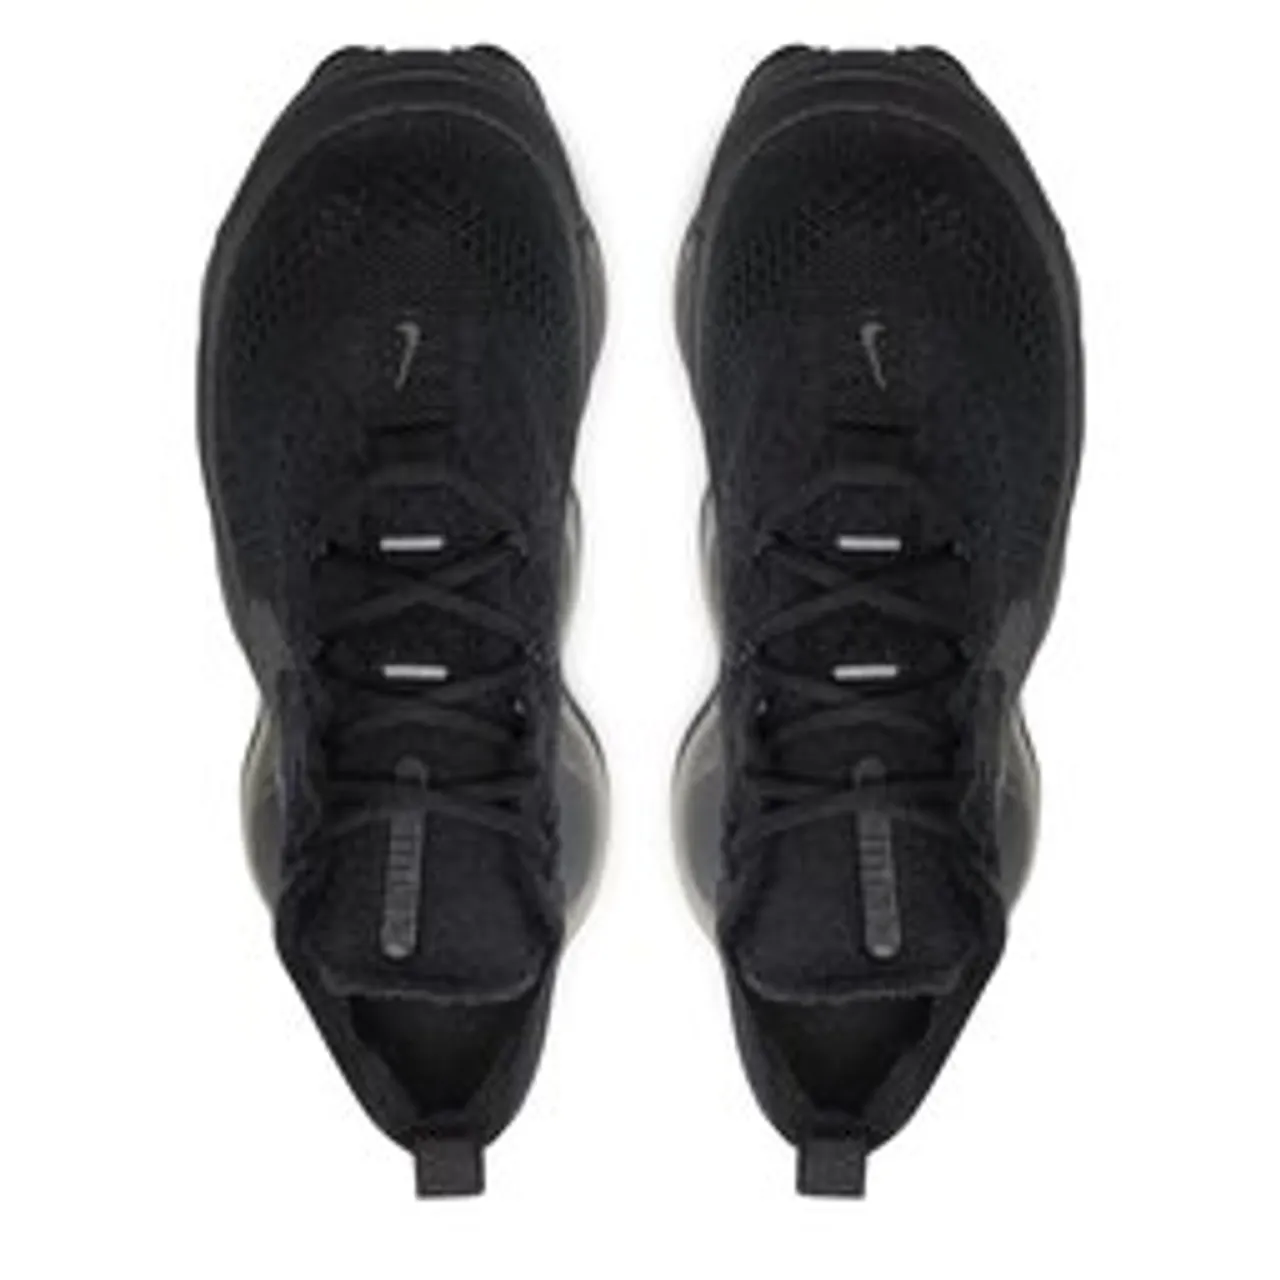 Sneakers Nike Air Max Scorpion Fk DJ4702 002 Schwarz